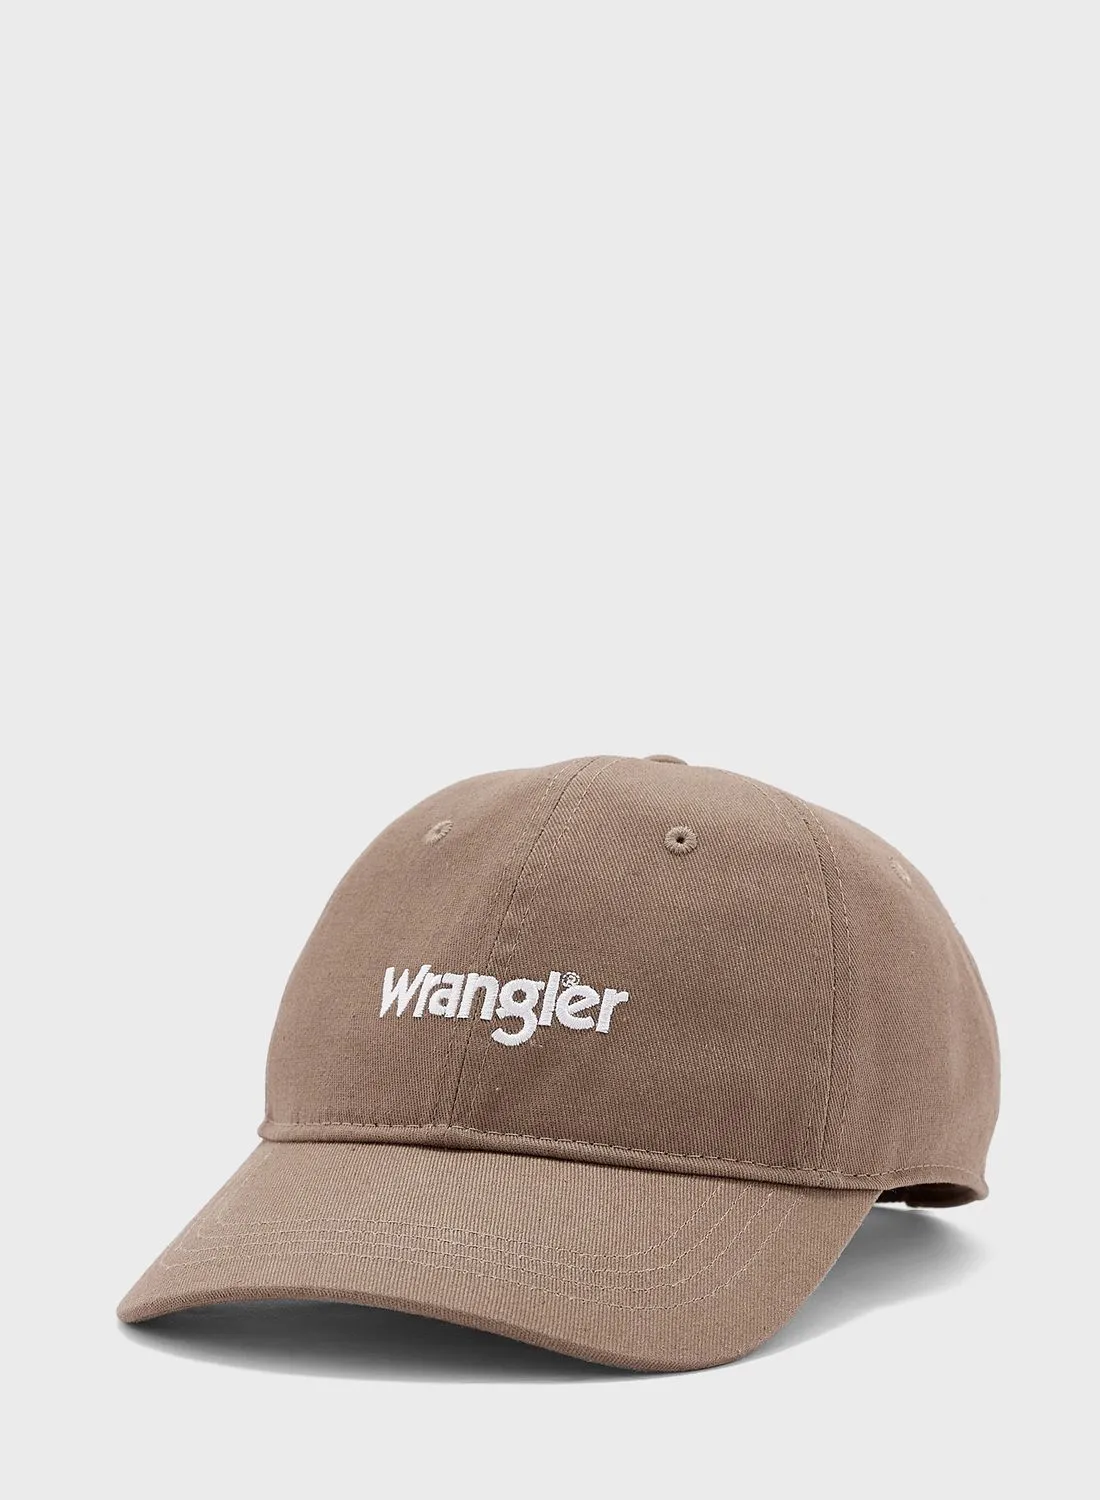 Wrangler Logo Curved Peak Caps